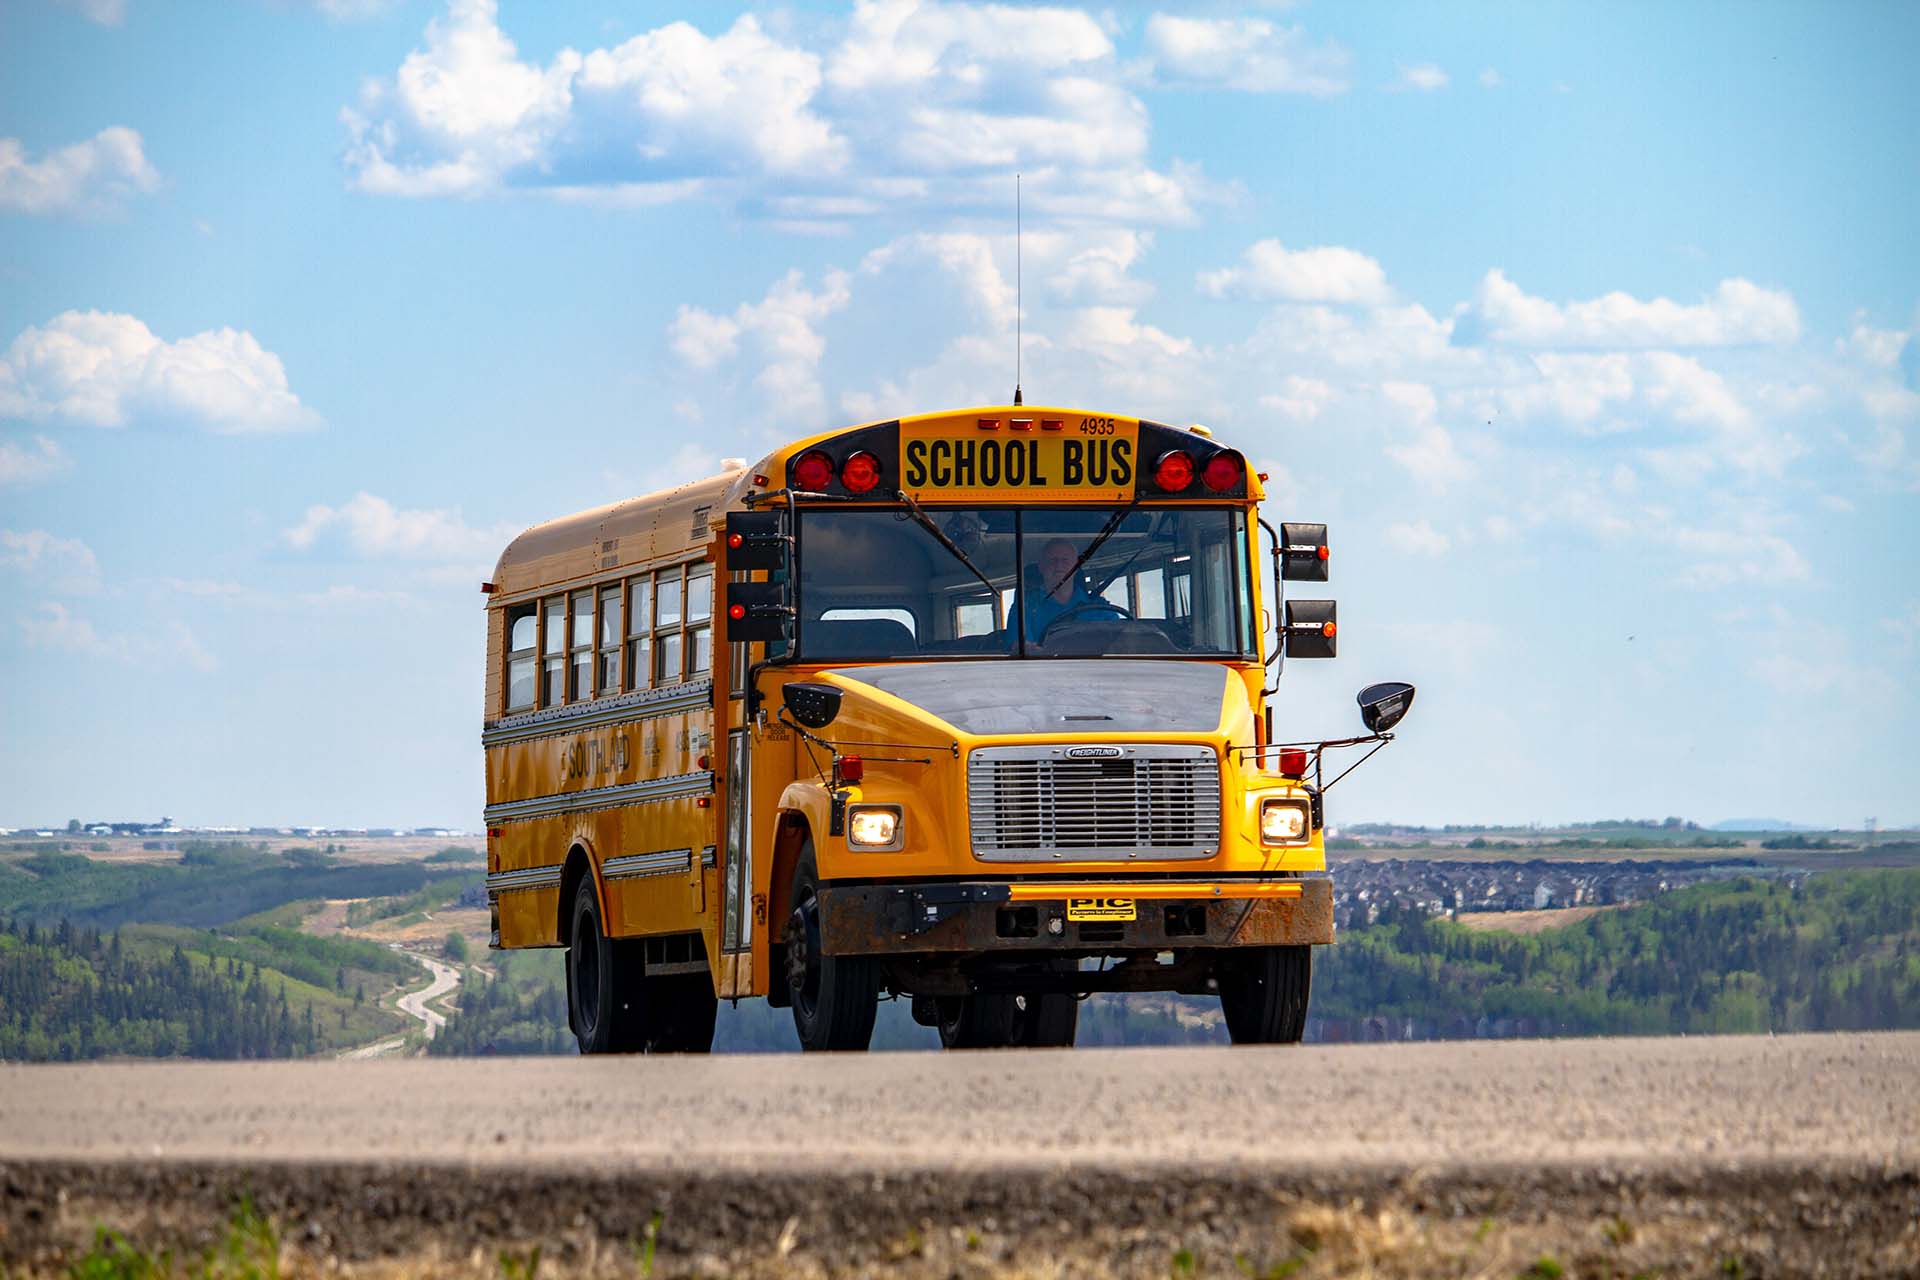 t2informatik Blog: Boom! School bus hits project manager!